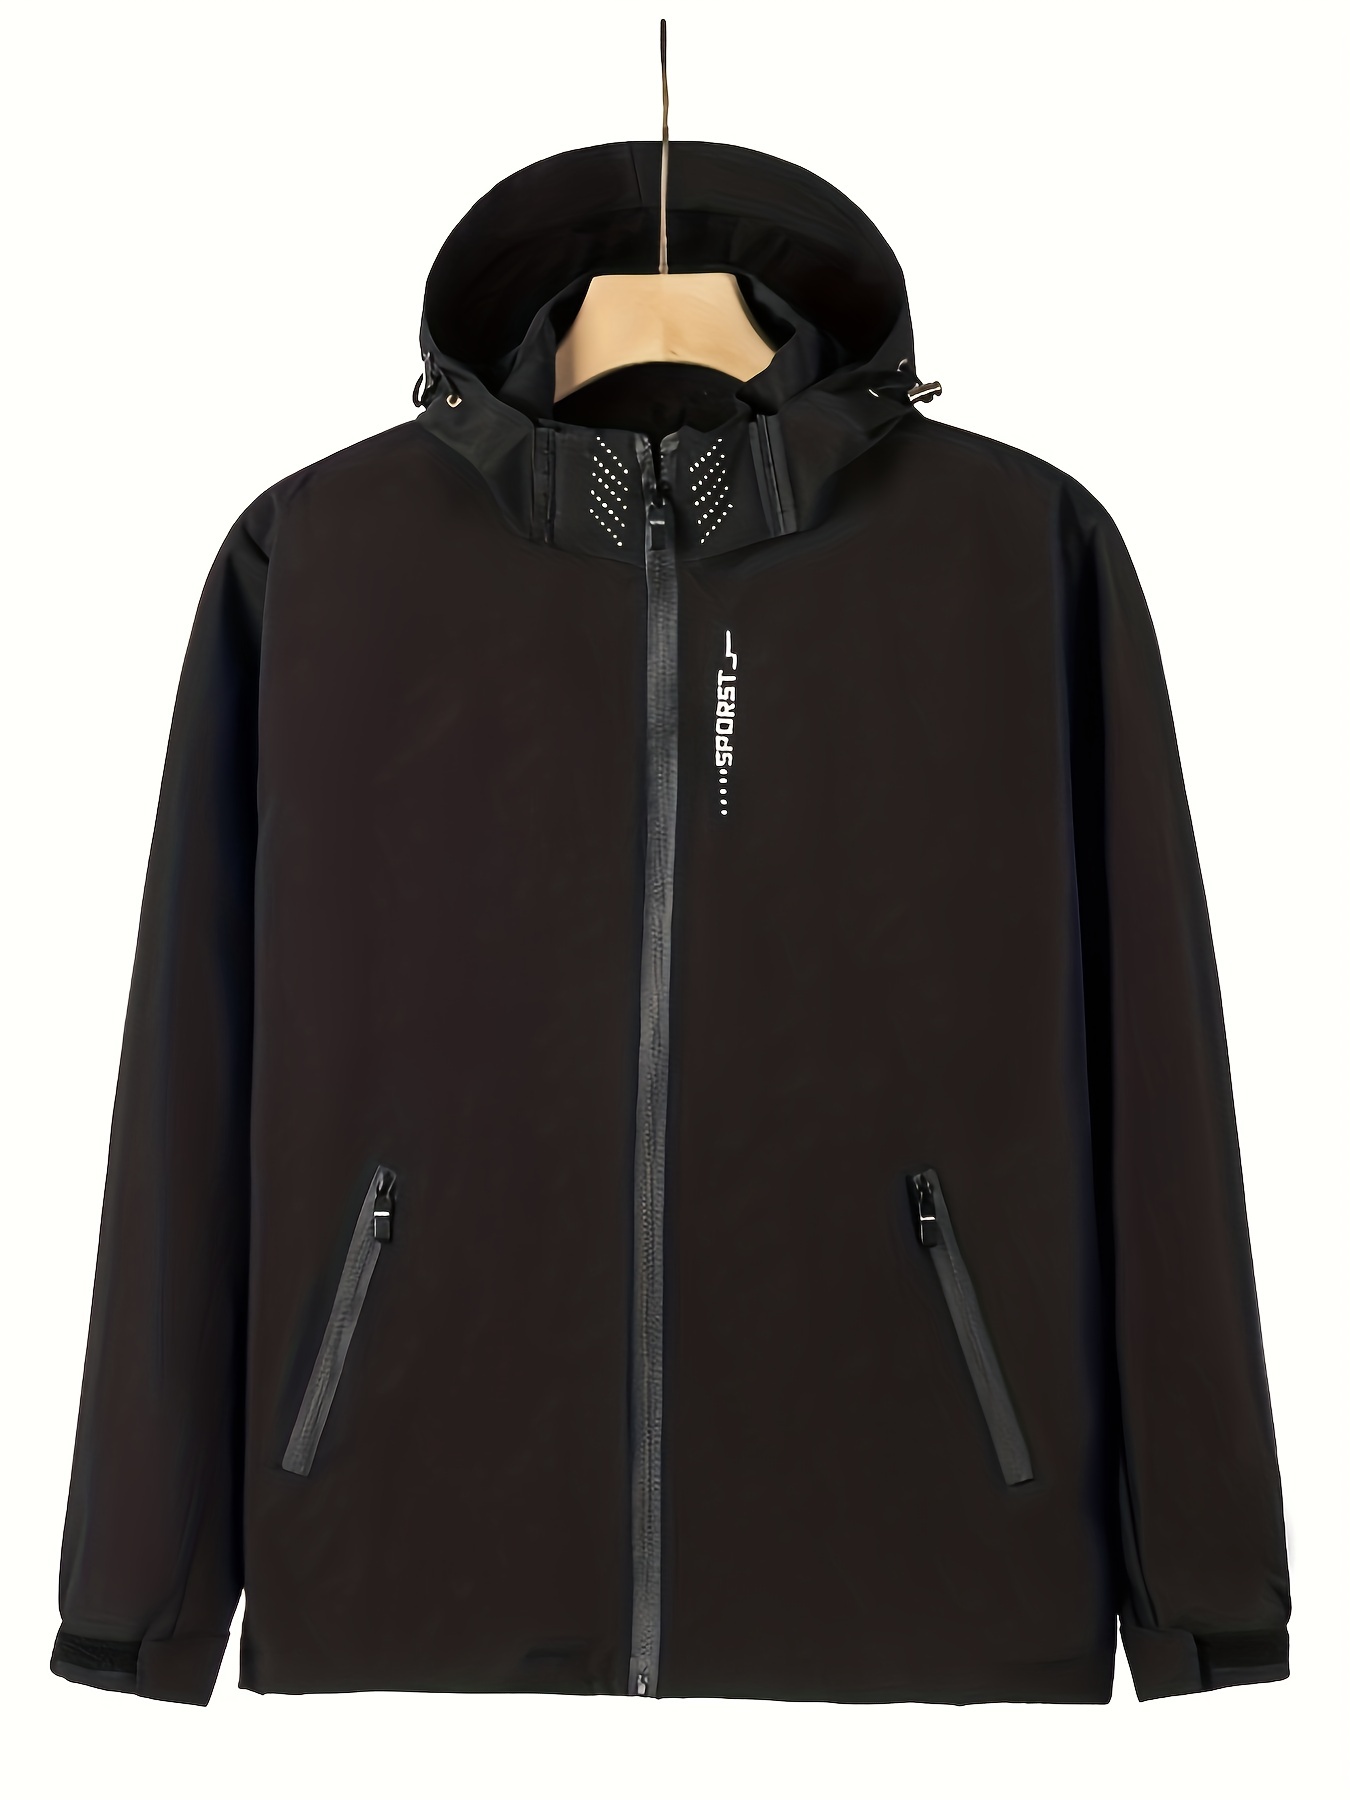 Men's Spring & Autumn Fashionable Loose Waterproof Windbreaker Jacket,  Casual Softshell Jacket